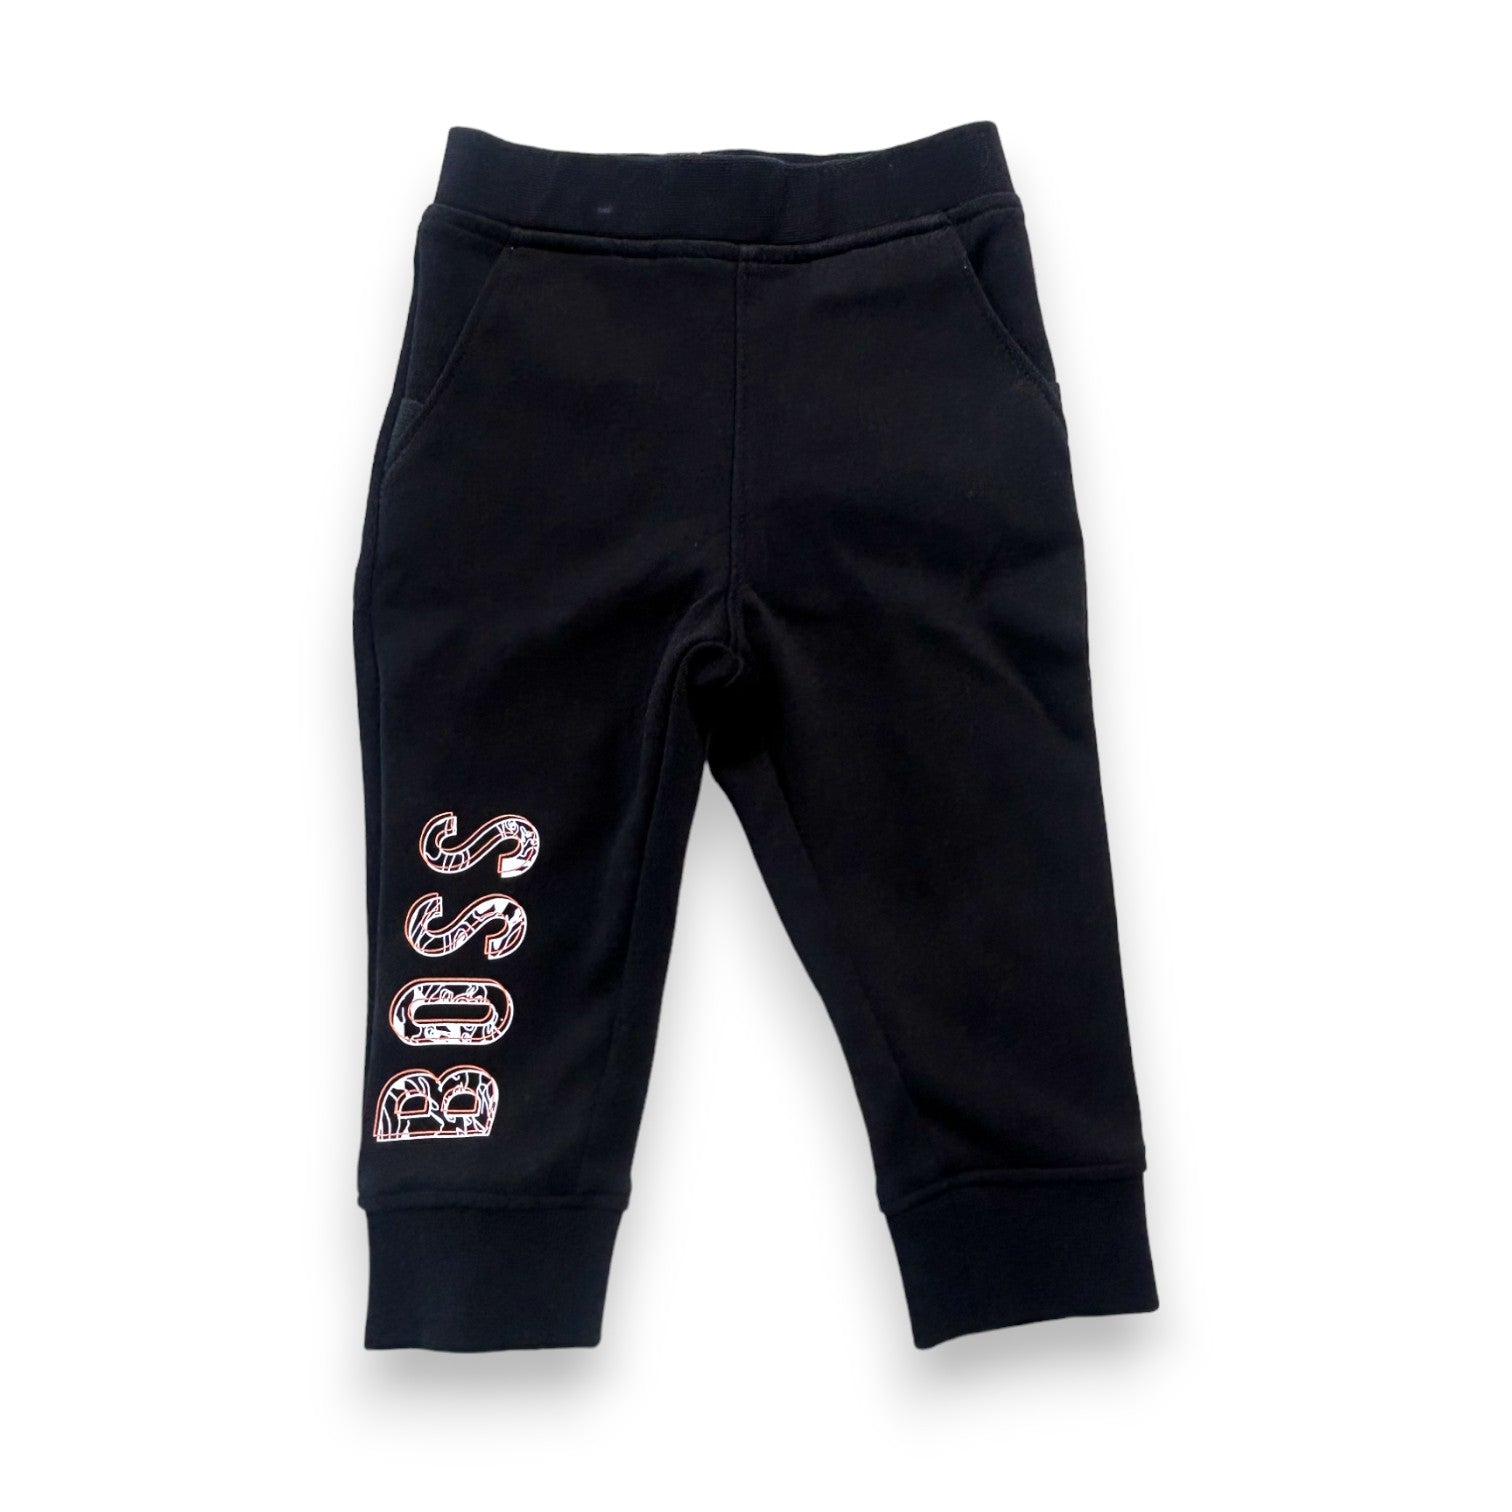 HUGO BOSS - Pantalon jogging noir - 12 mois